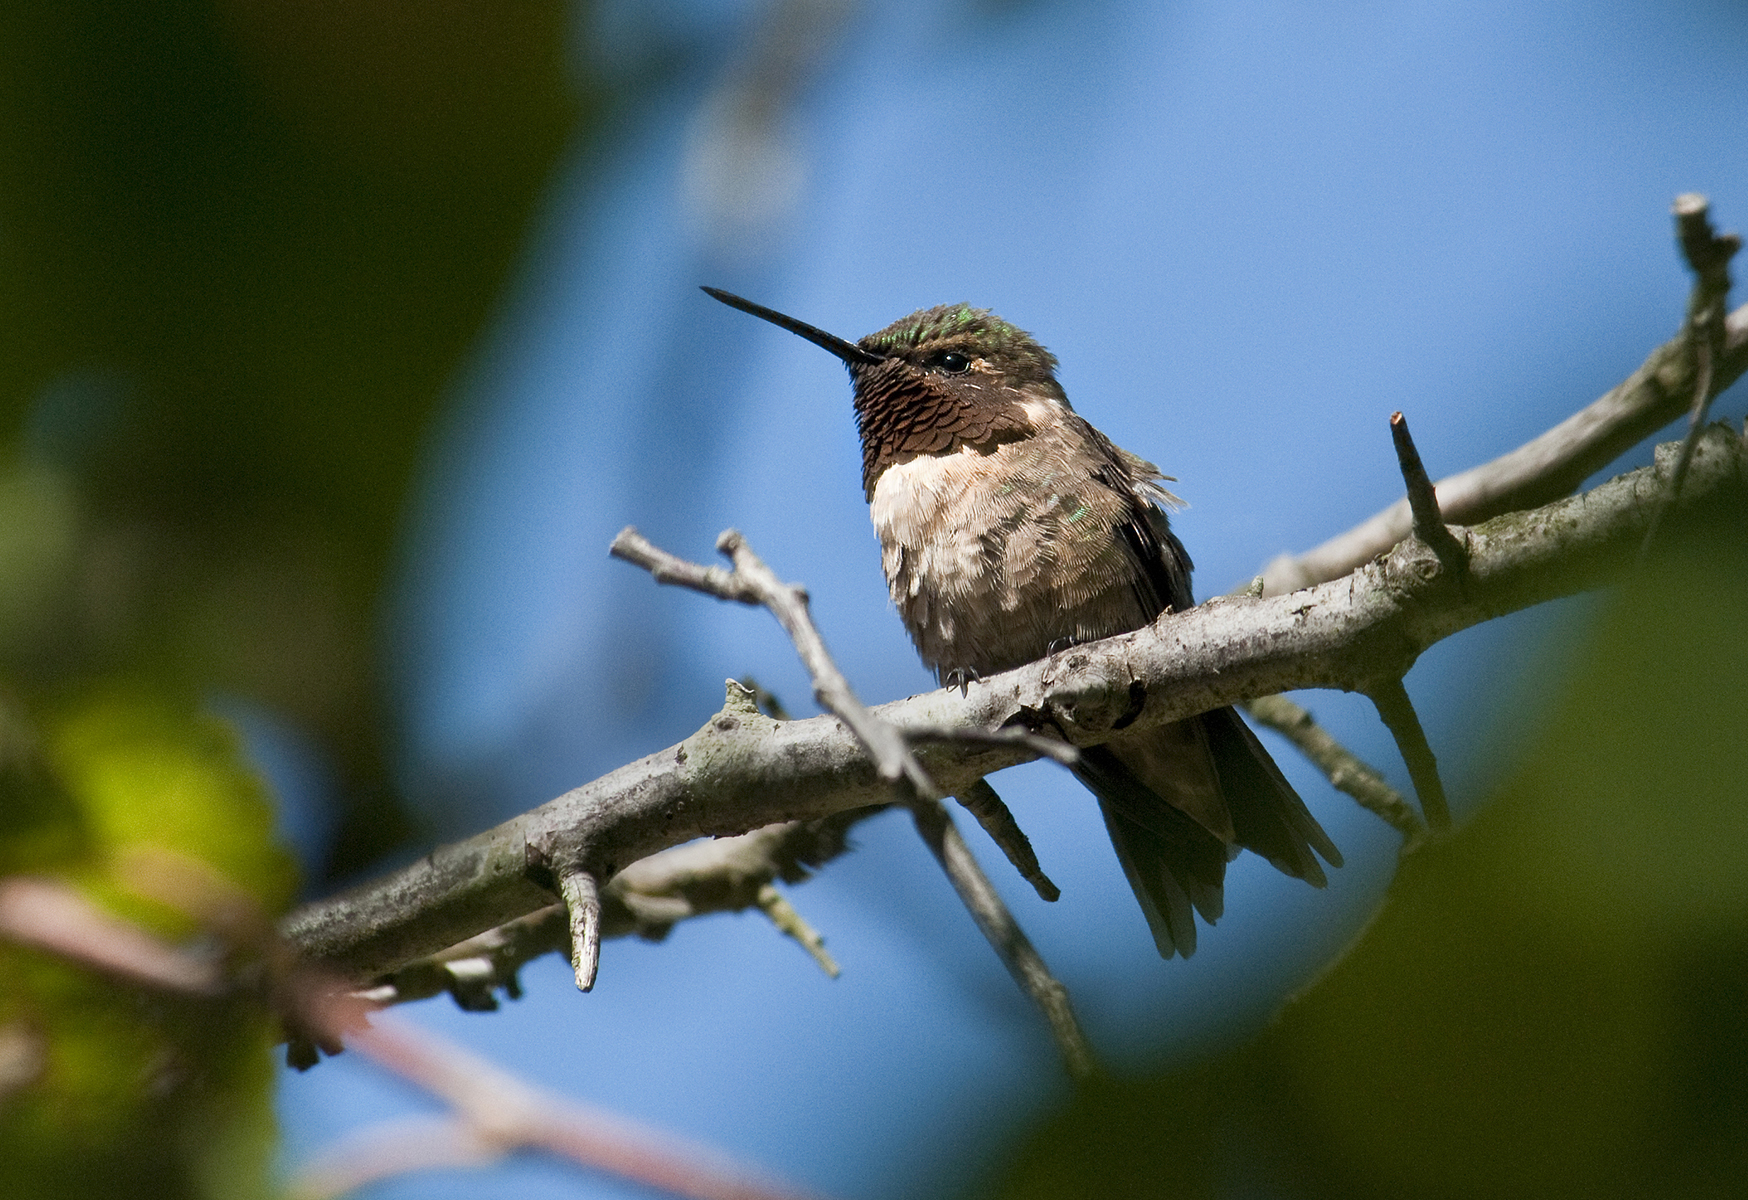 Ruby-throated hummingbird migration begins